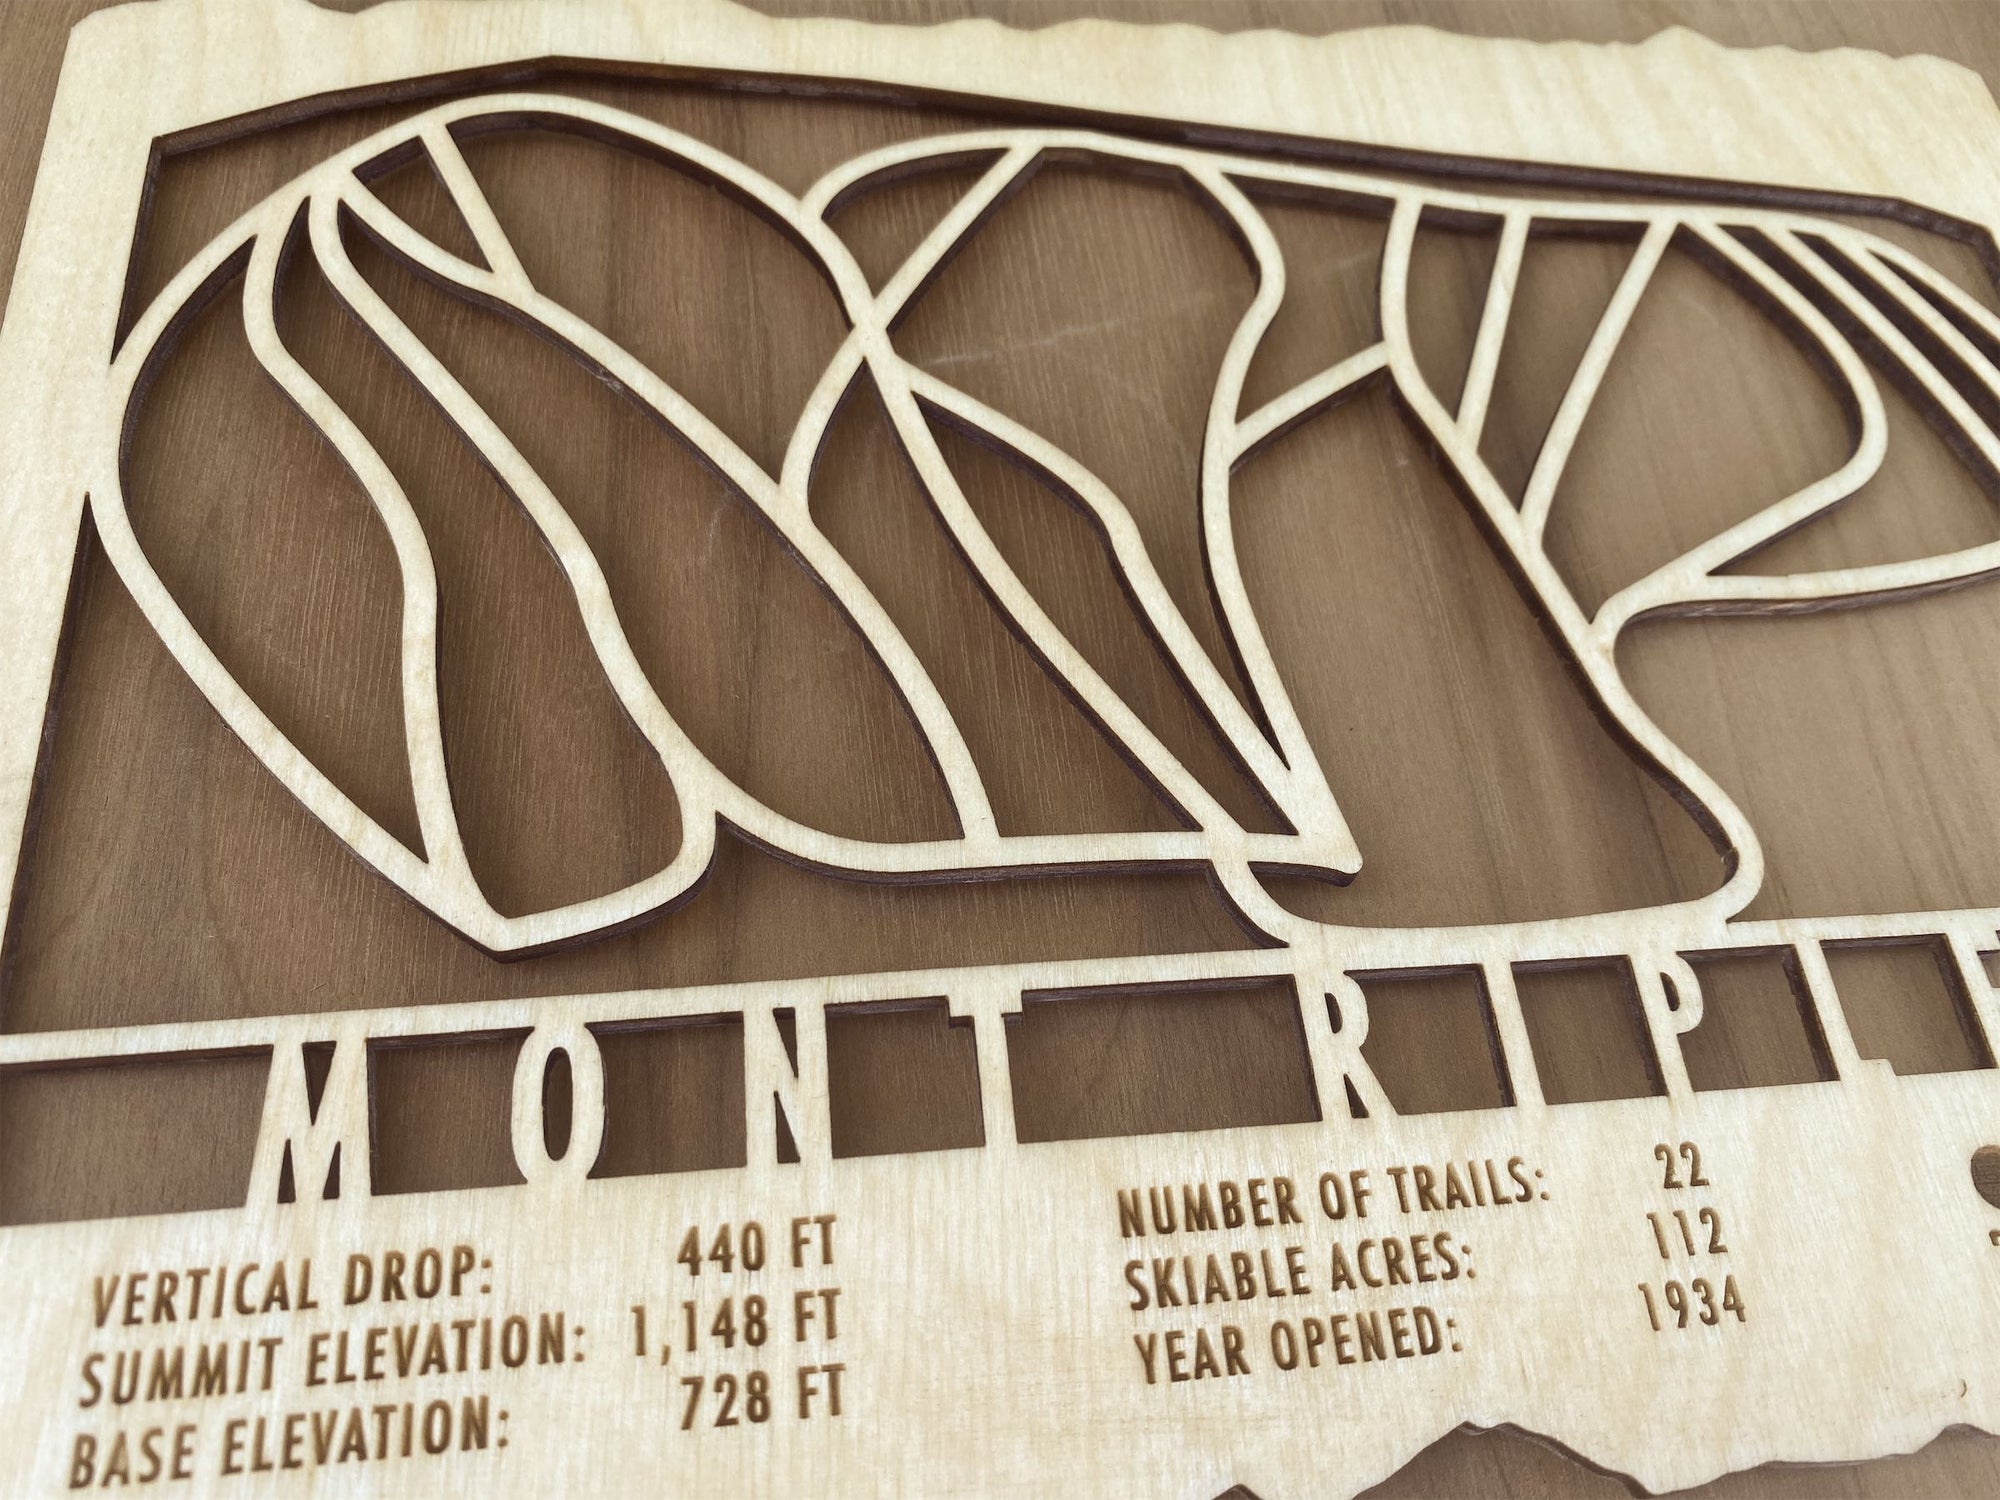 Mont Ripley Trail Map